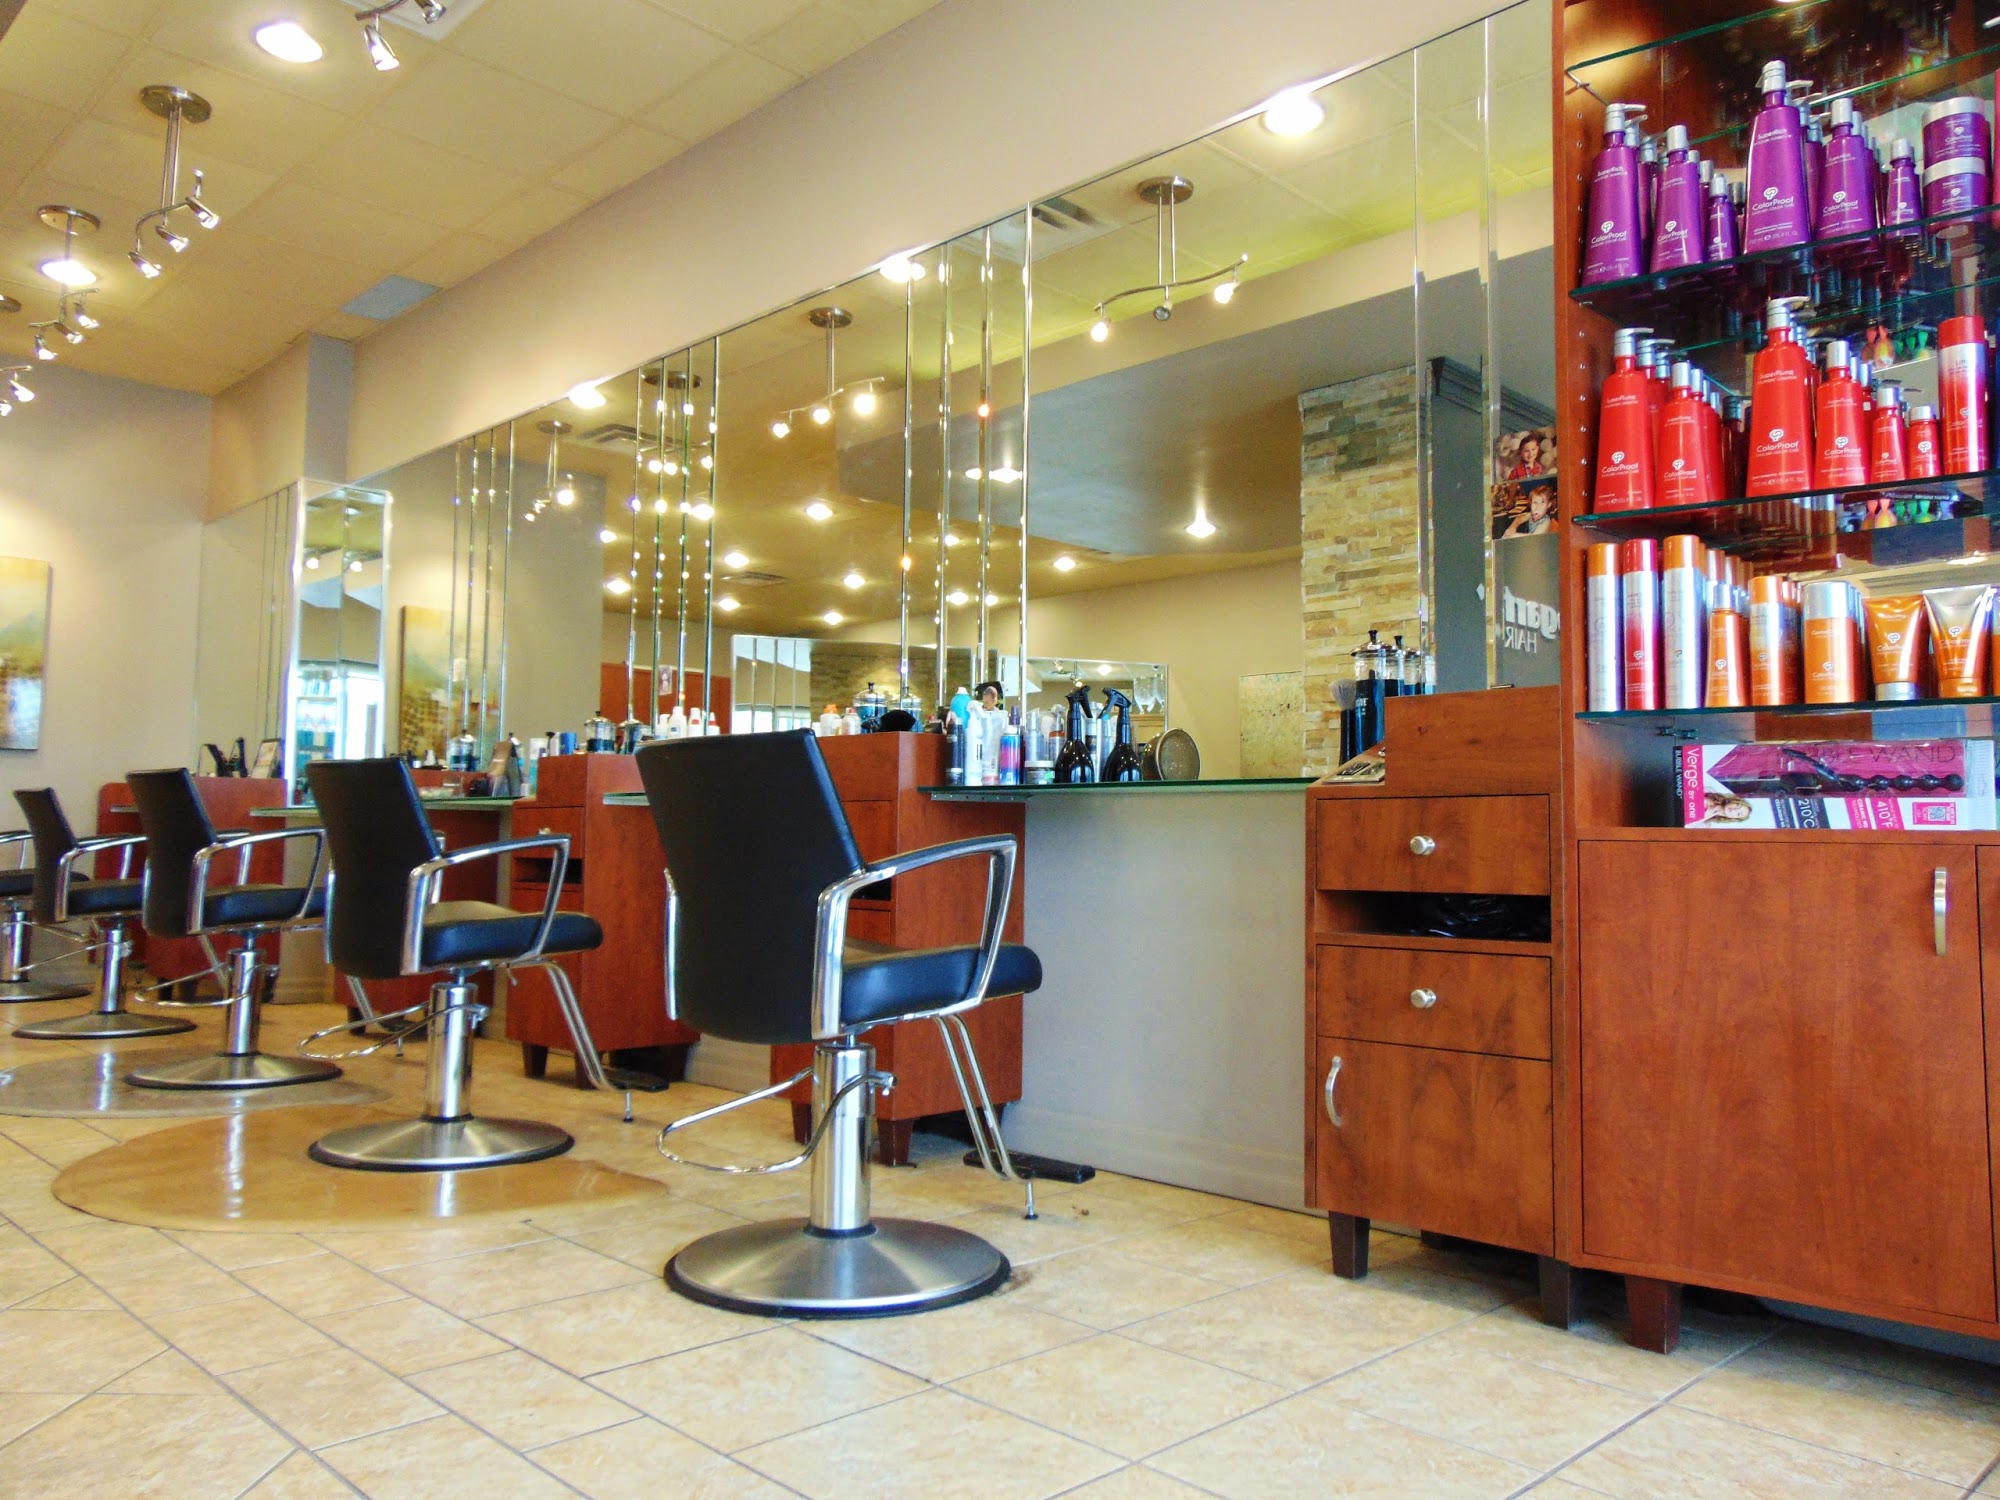 Bogart's Hair Salon | Modern Barbershop